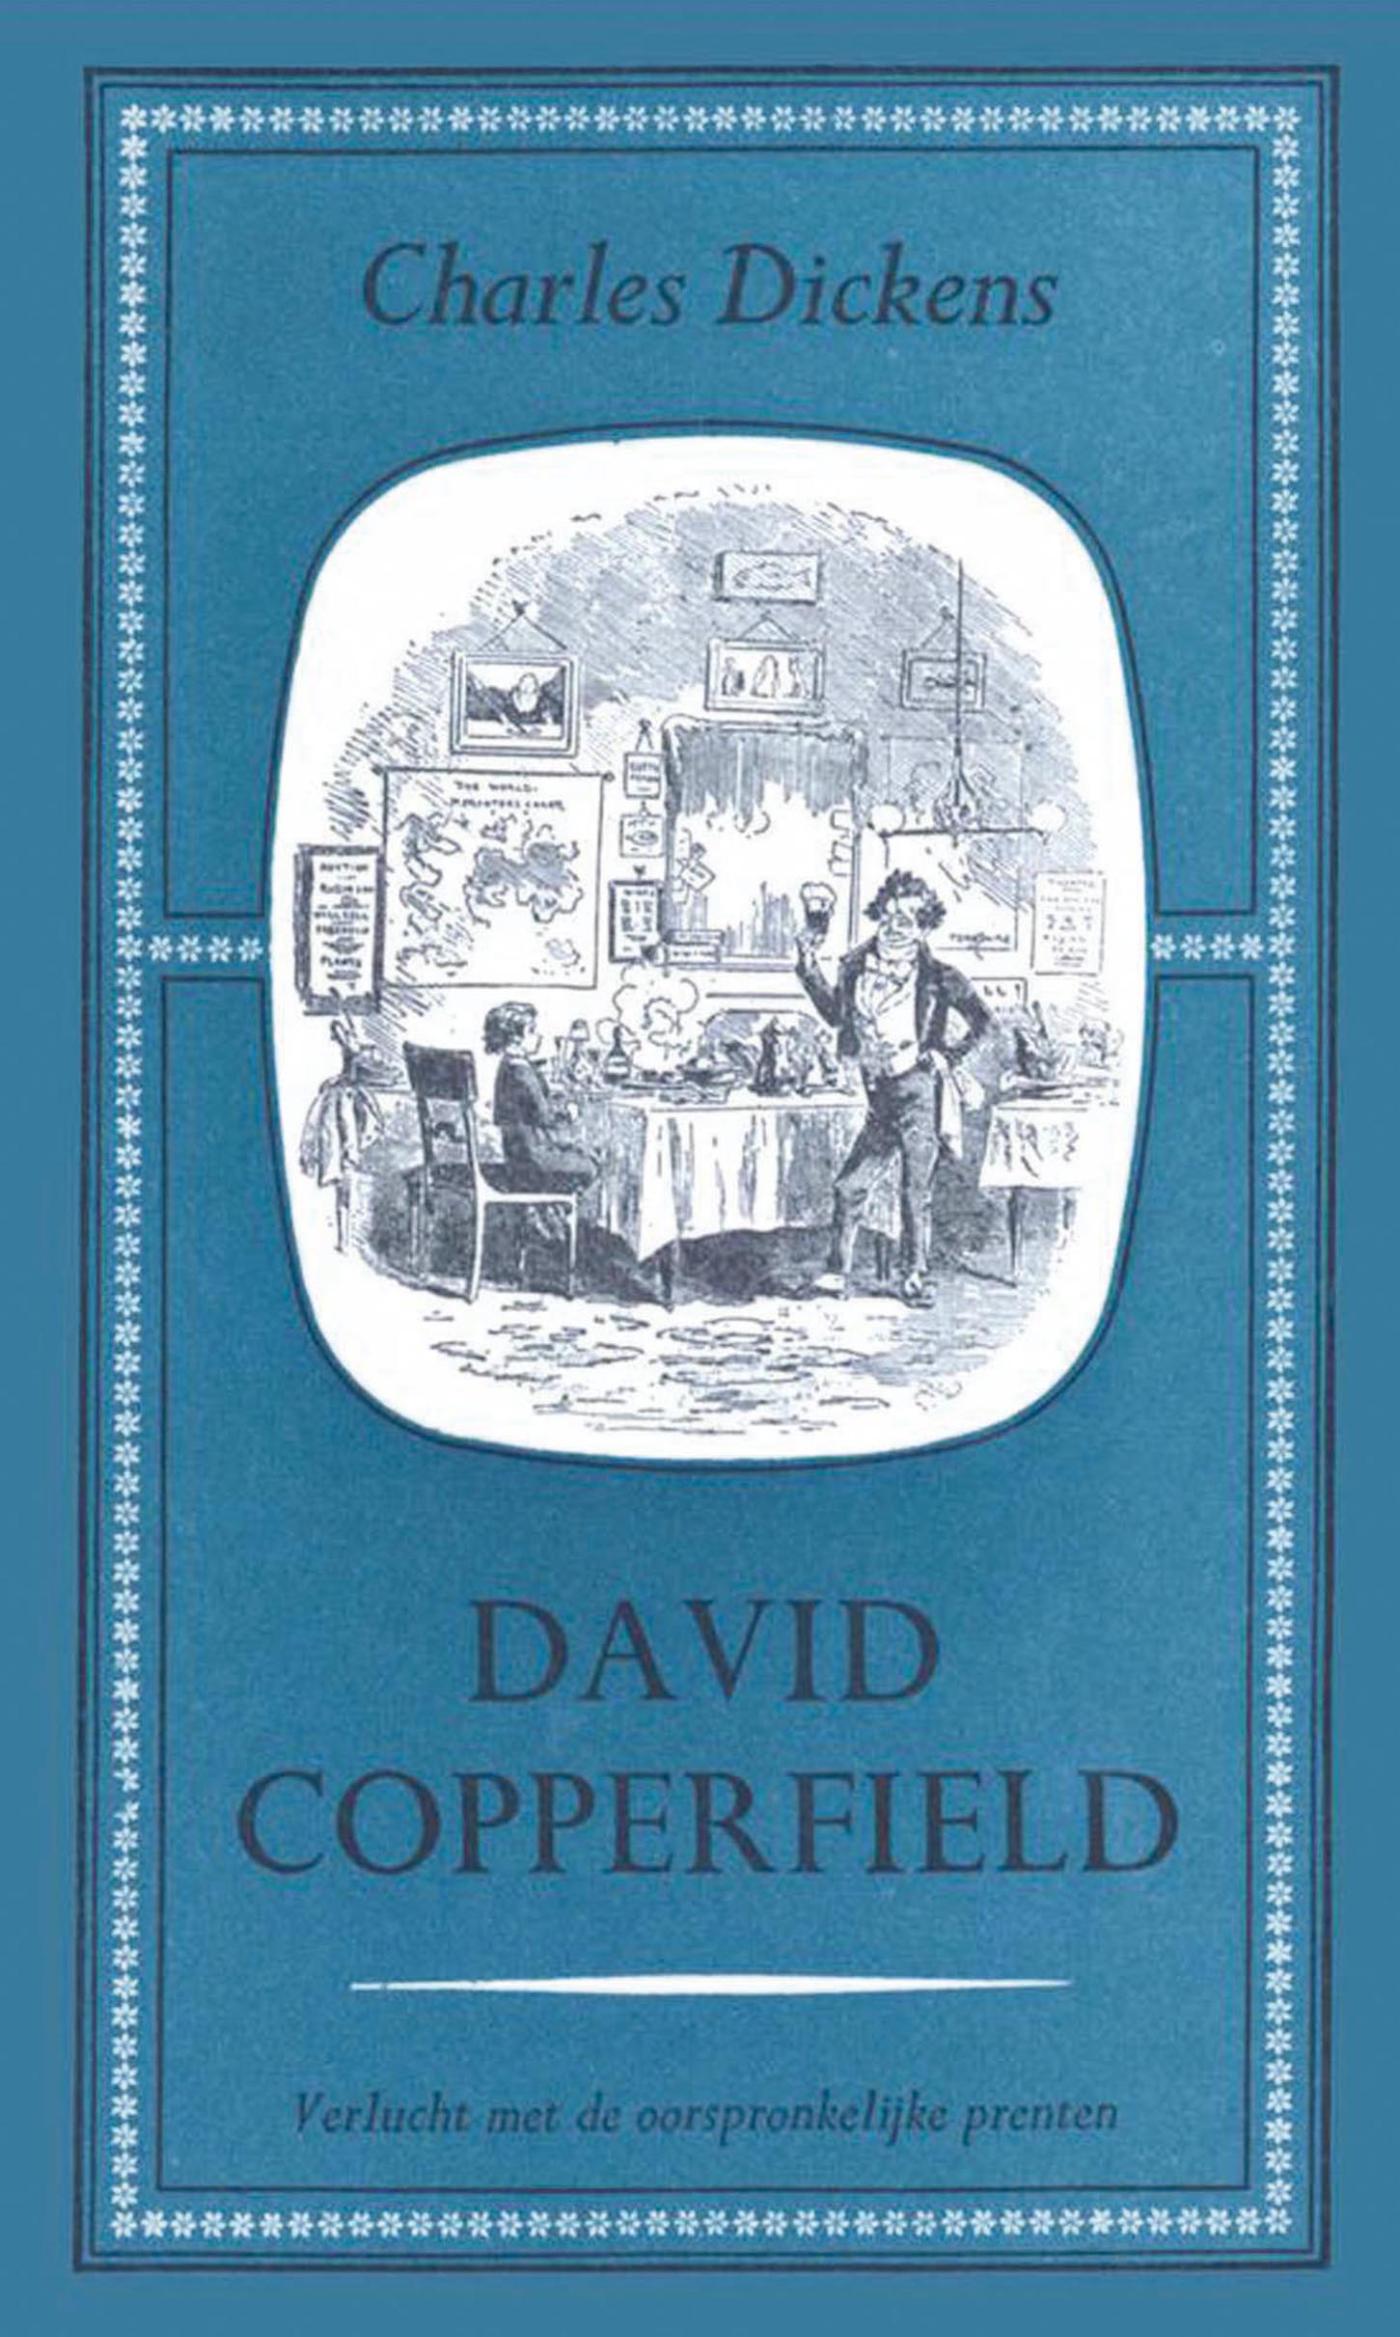 david copperfield gutenberg